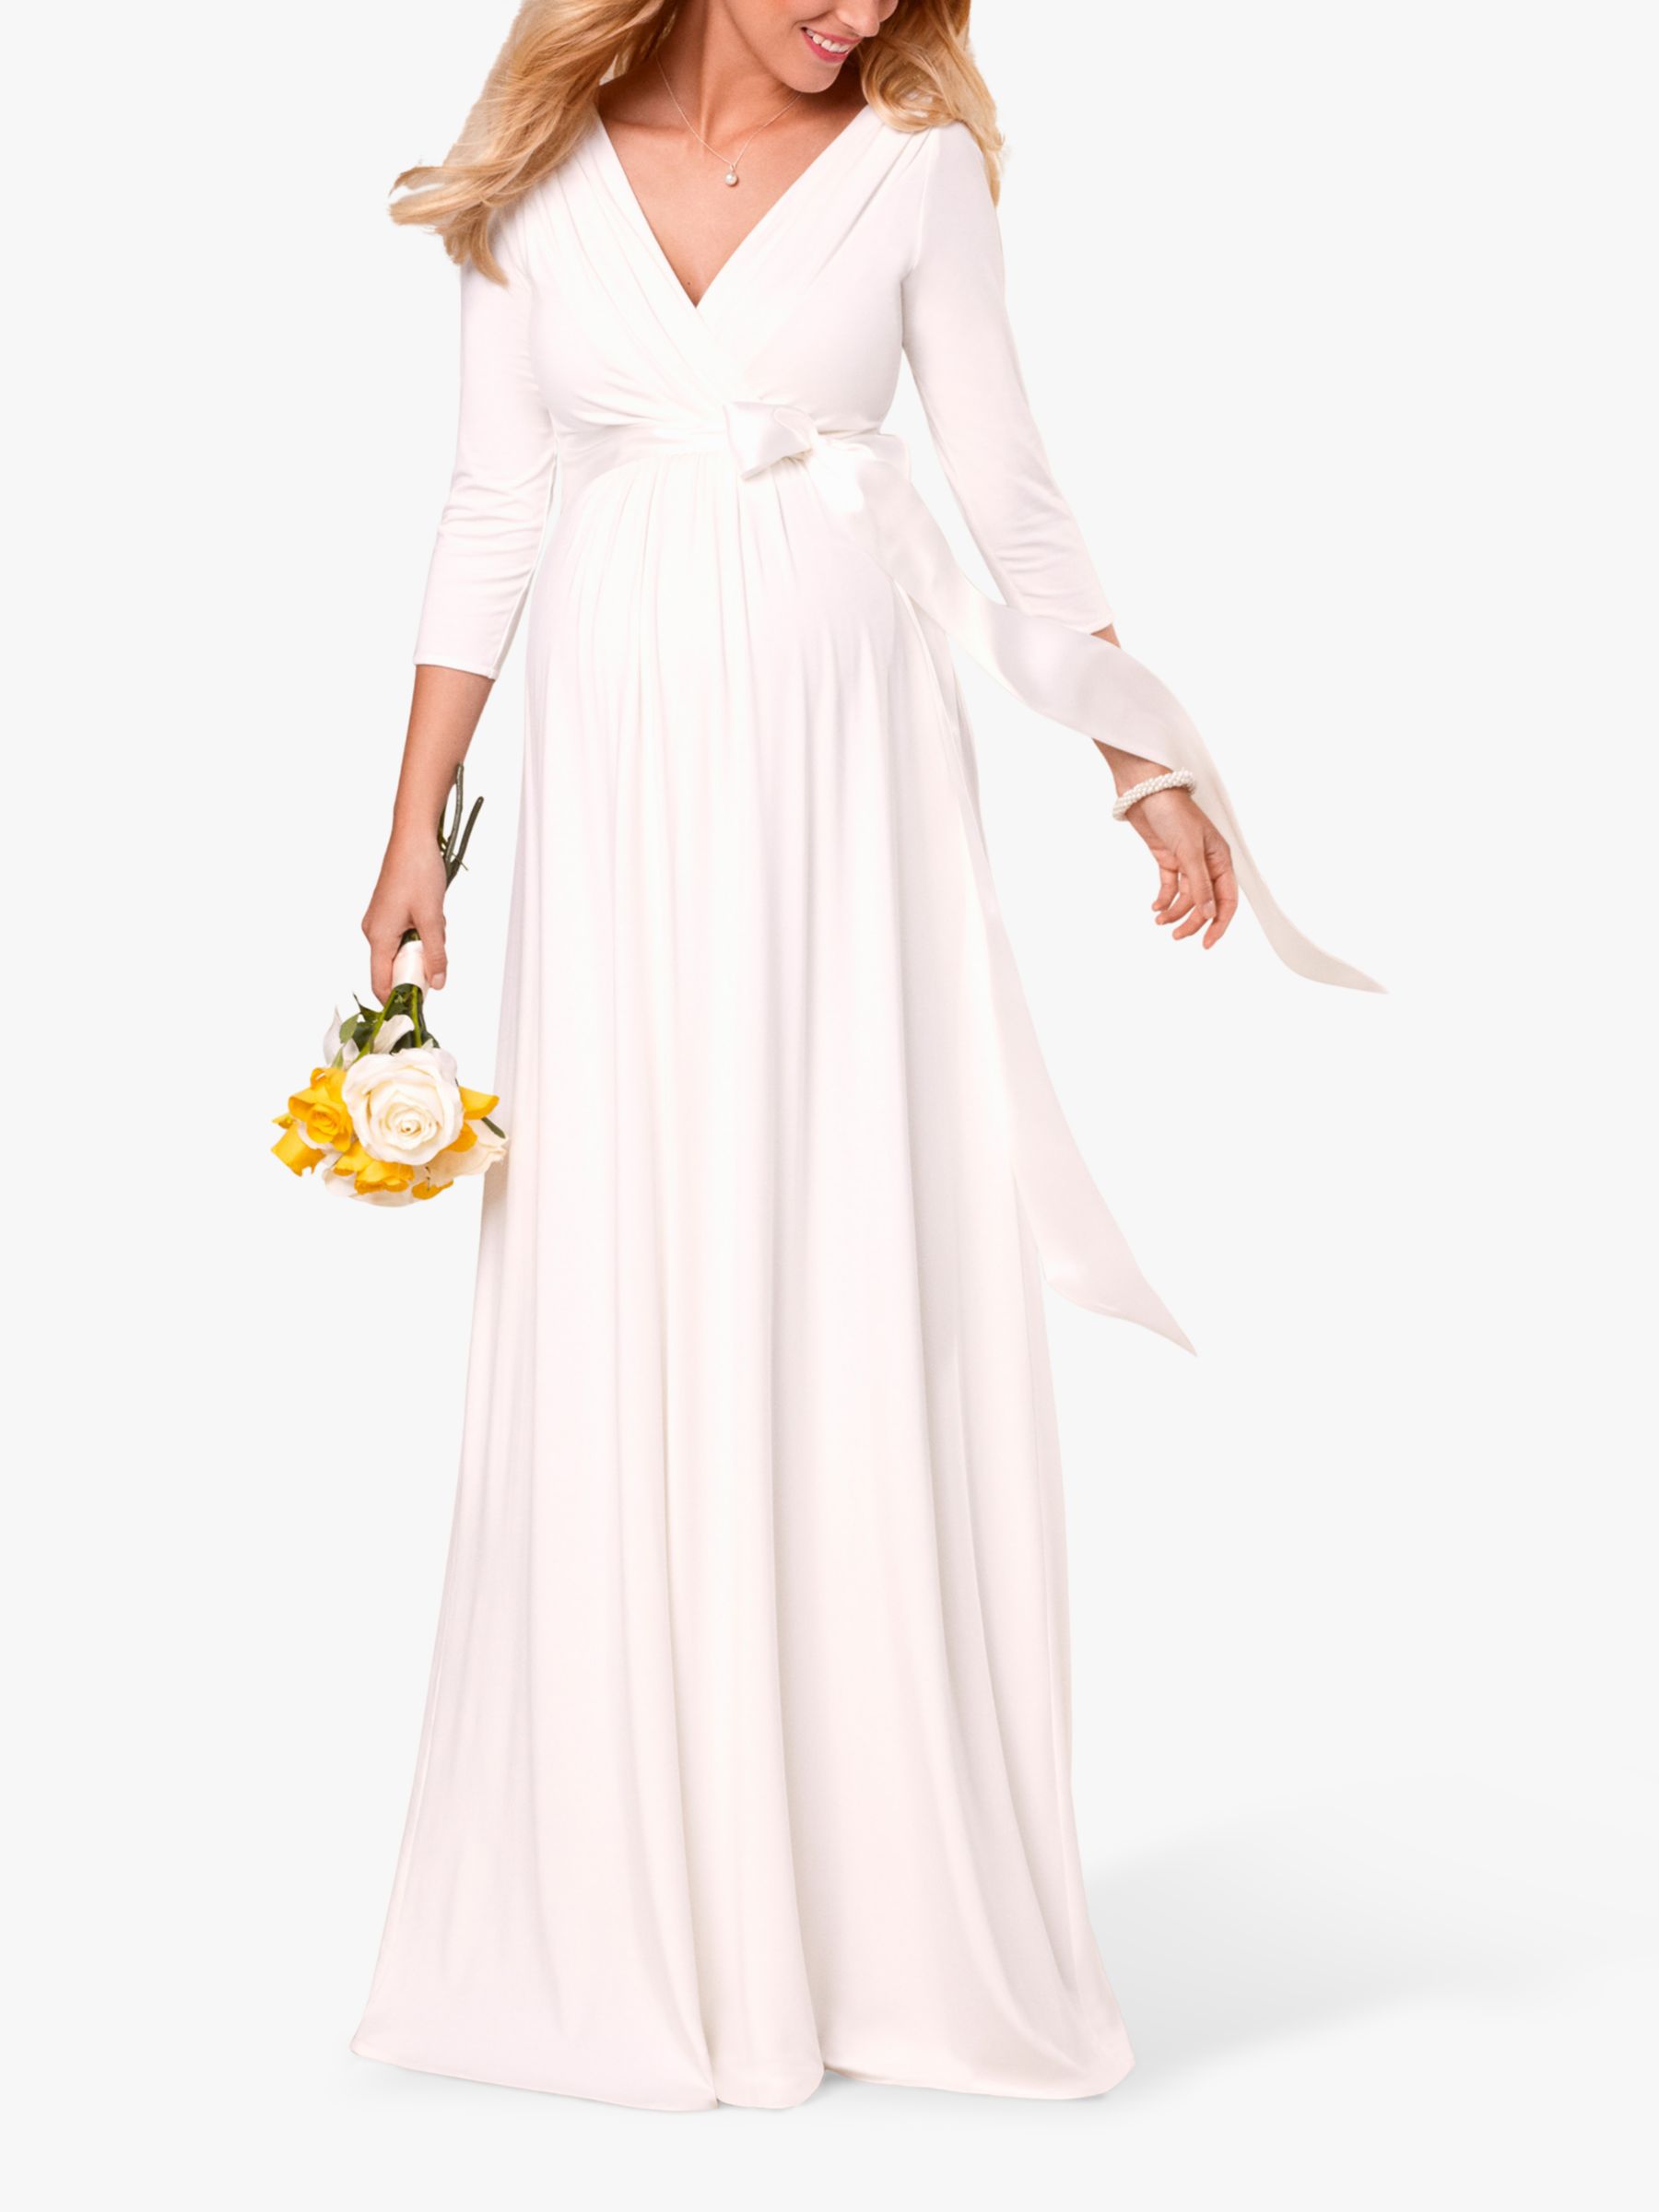 Tiffany Rose Willow Maternity Wedding Dress, Ivory, 6-8